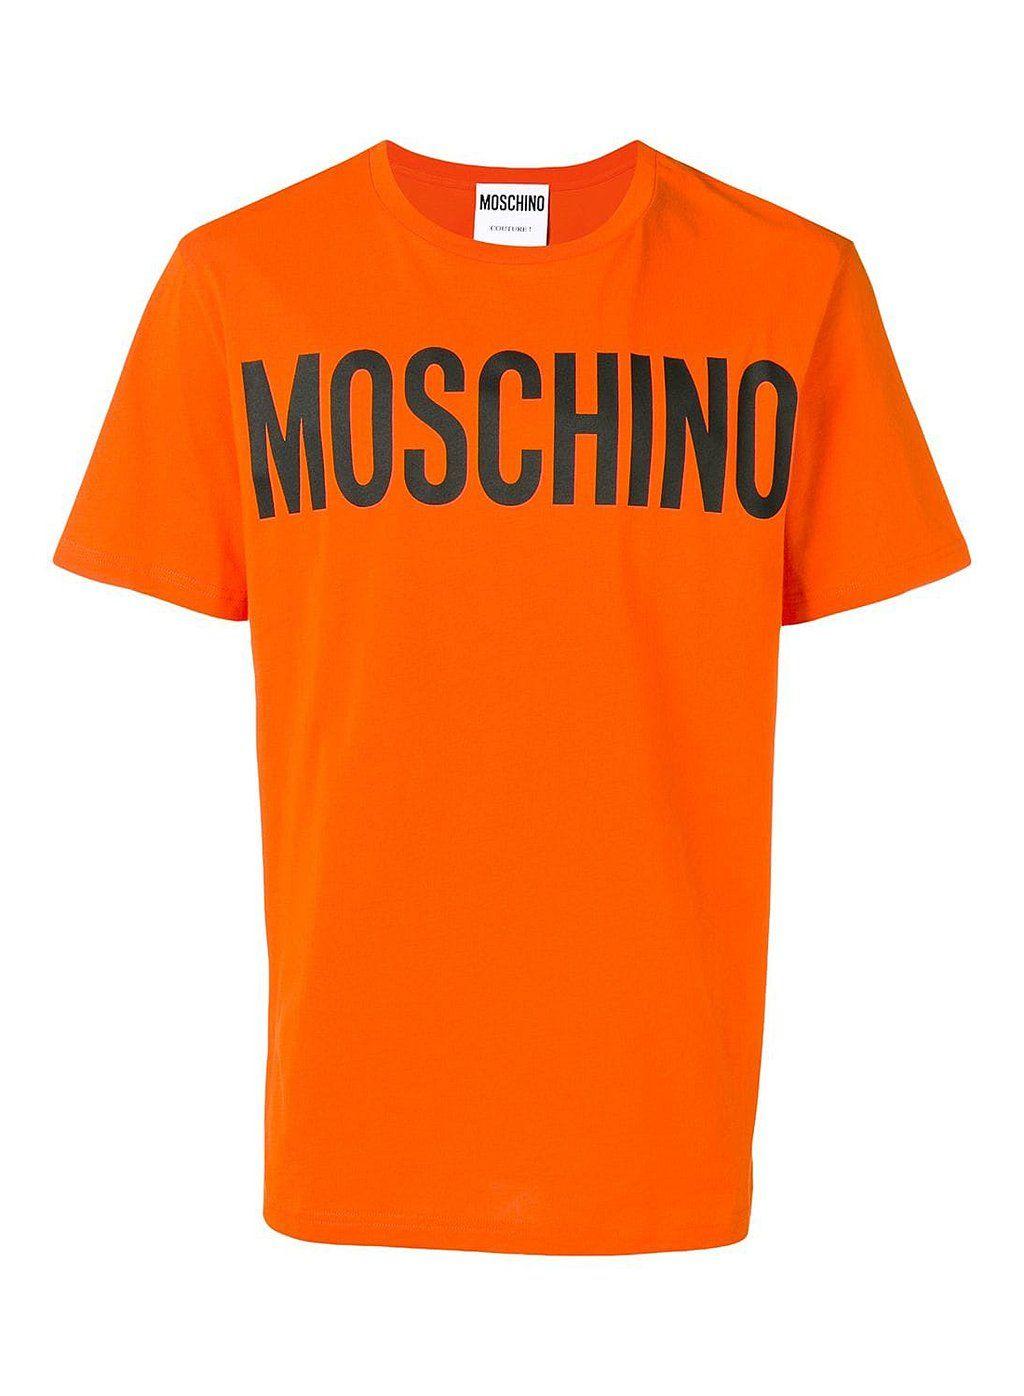 Orange T Logo - Moschino Moschino Classic Logo Tee - Orange | Philip Browne Menswear